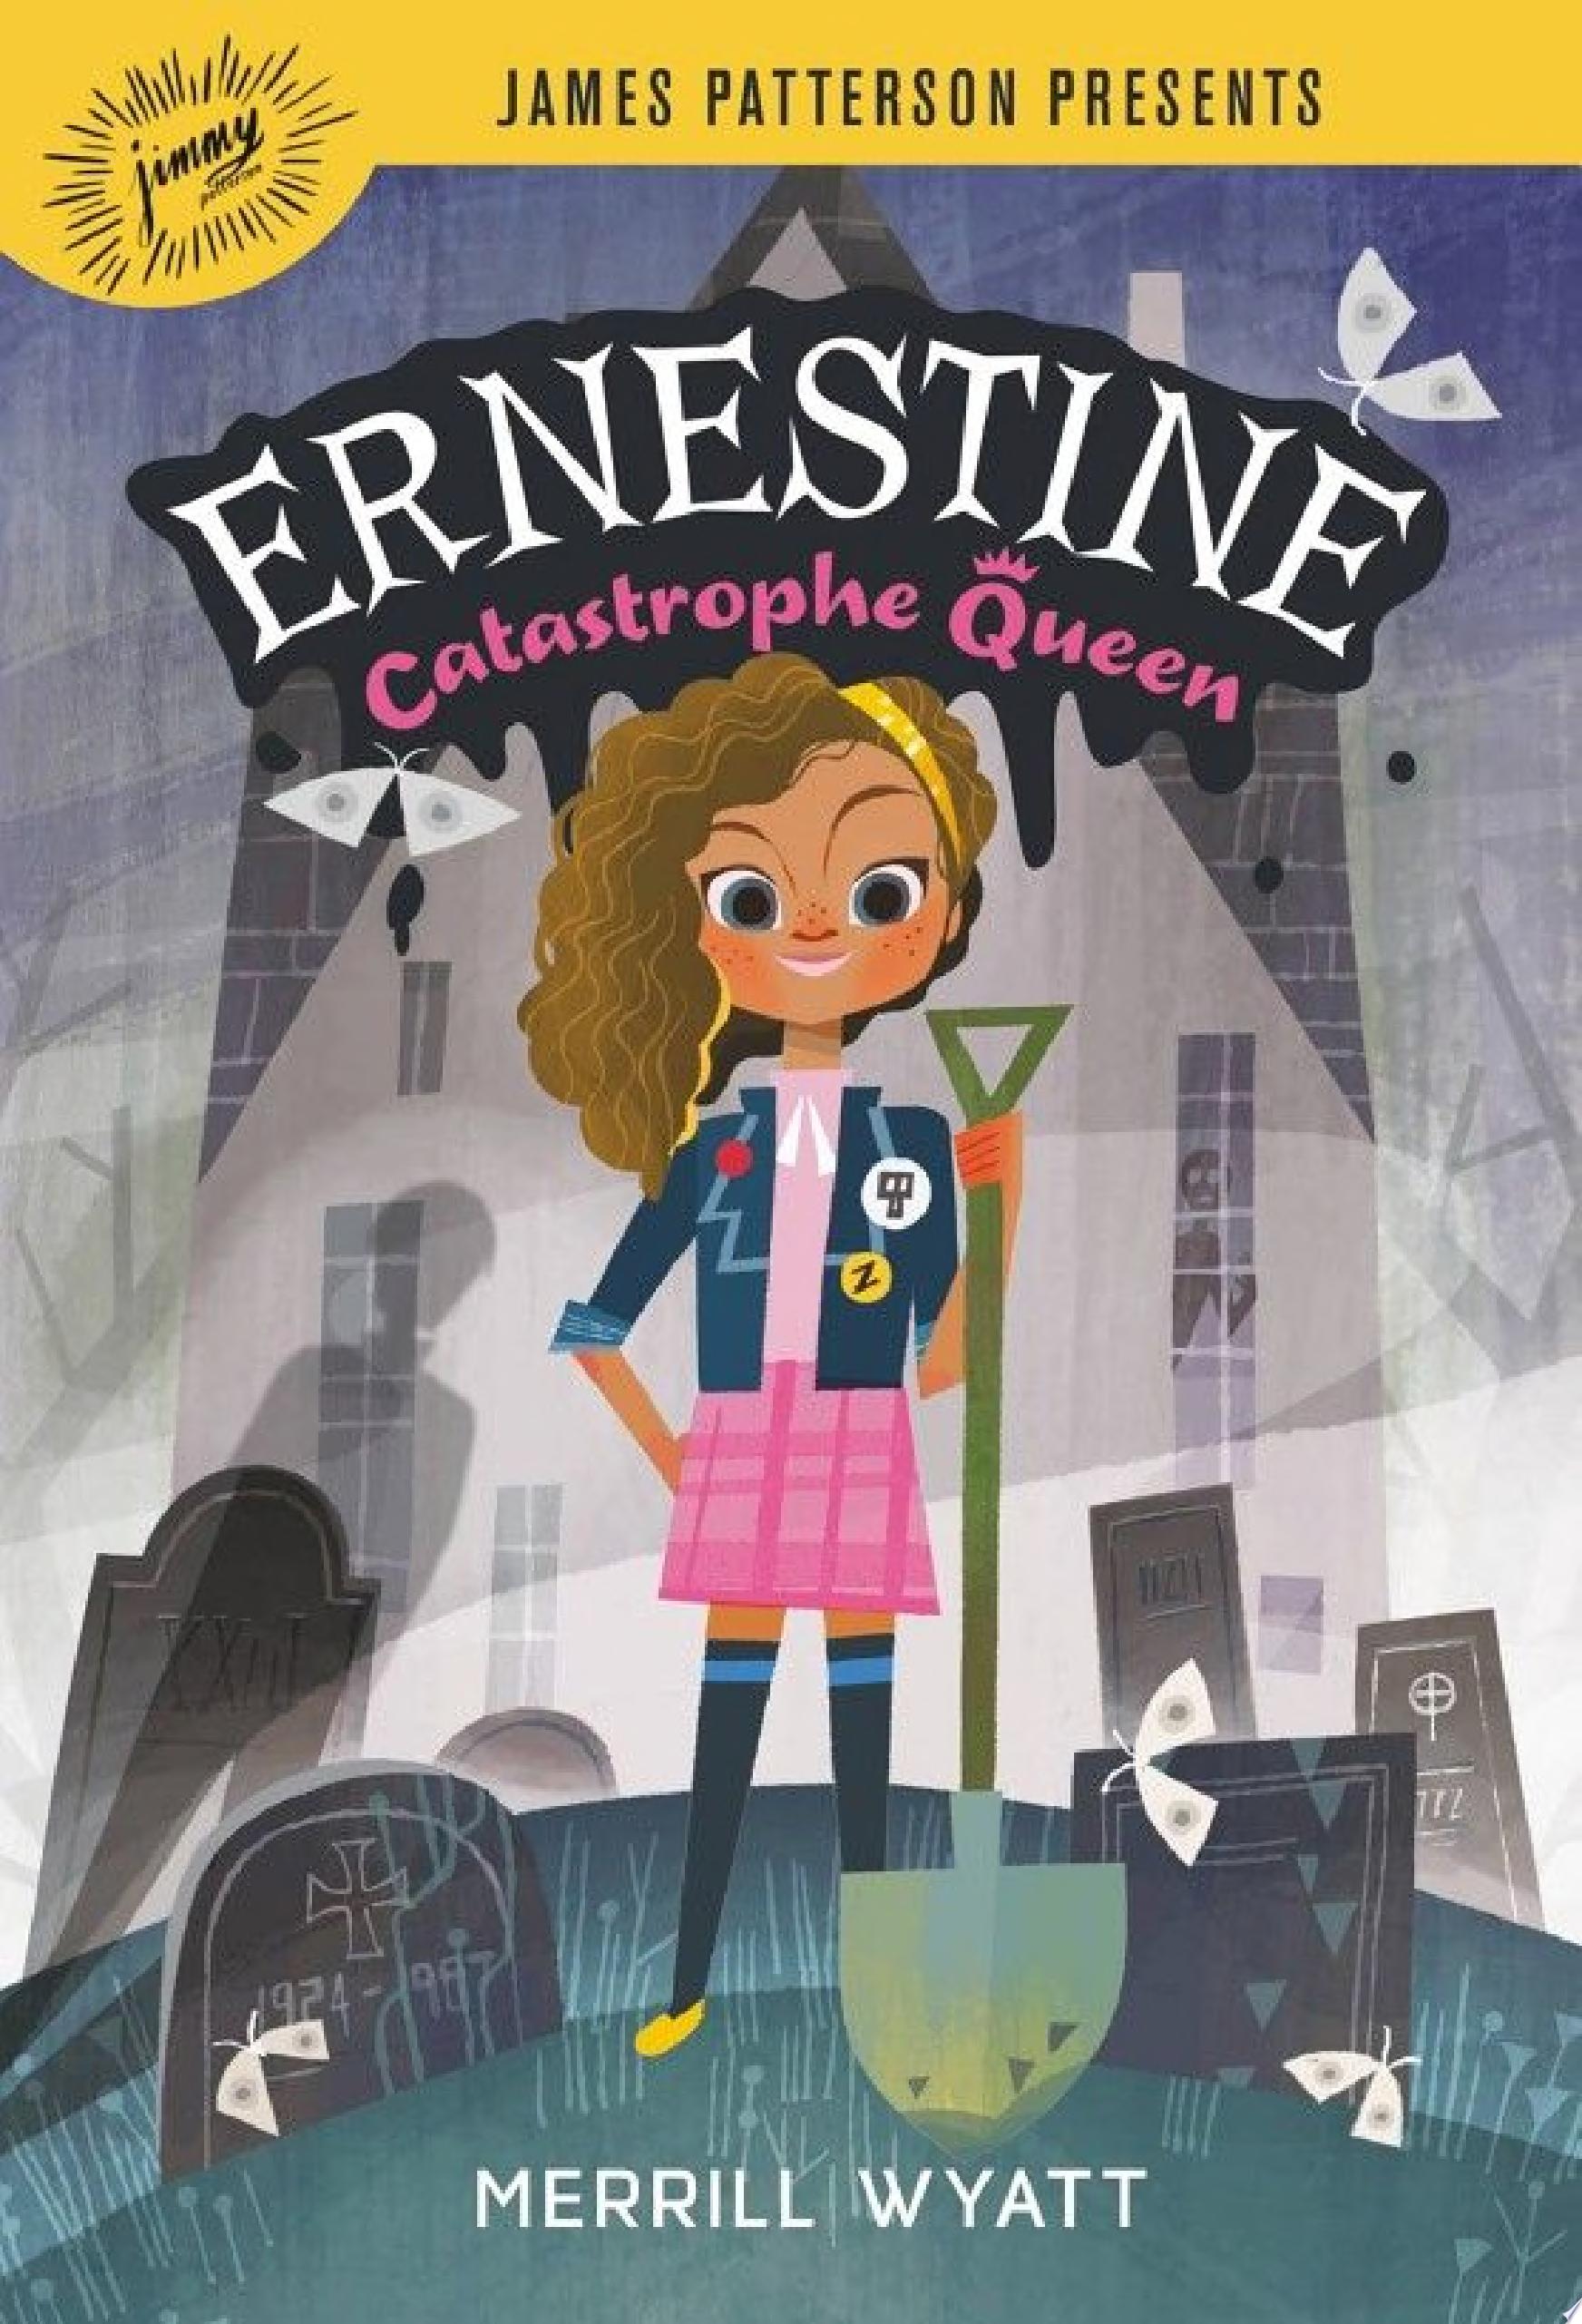 Image for "Ernestine, Catastrophe Queen"